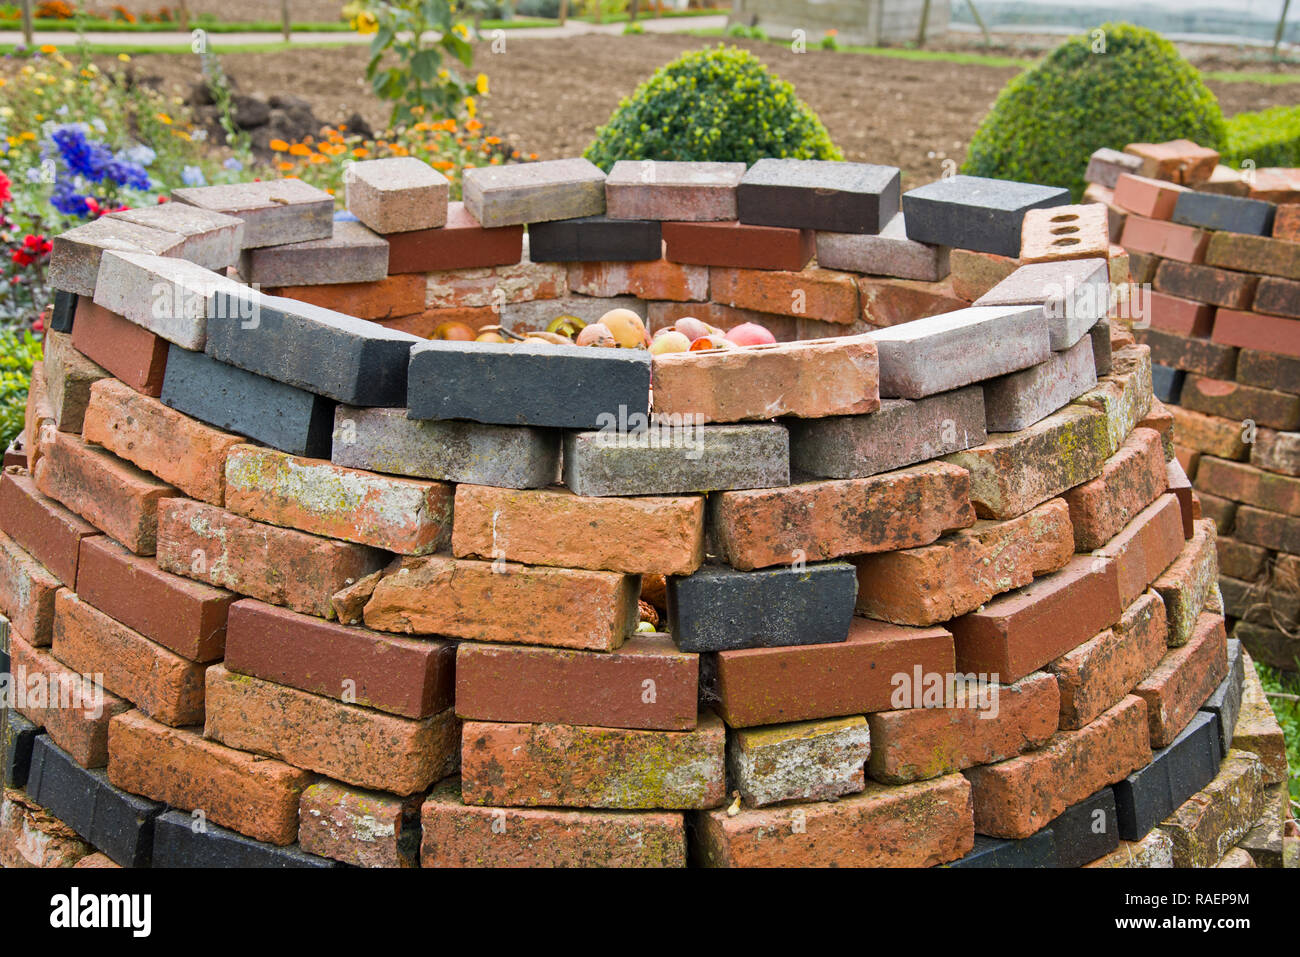 Makeshift brick built compost bin Stock Photo